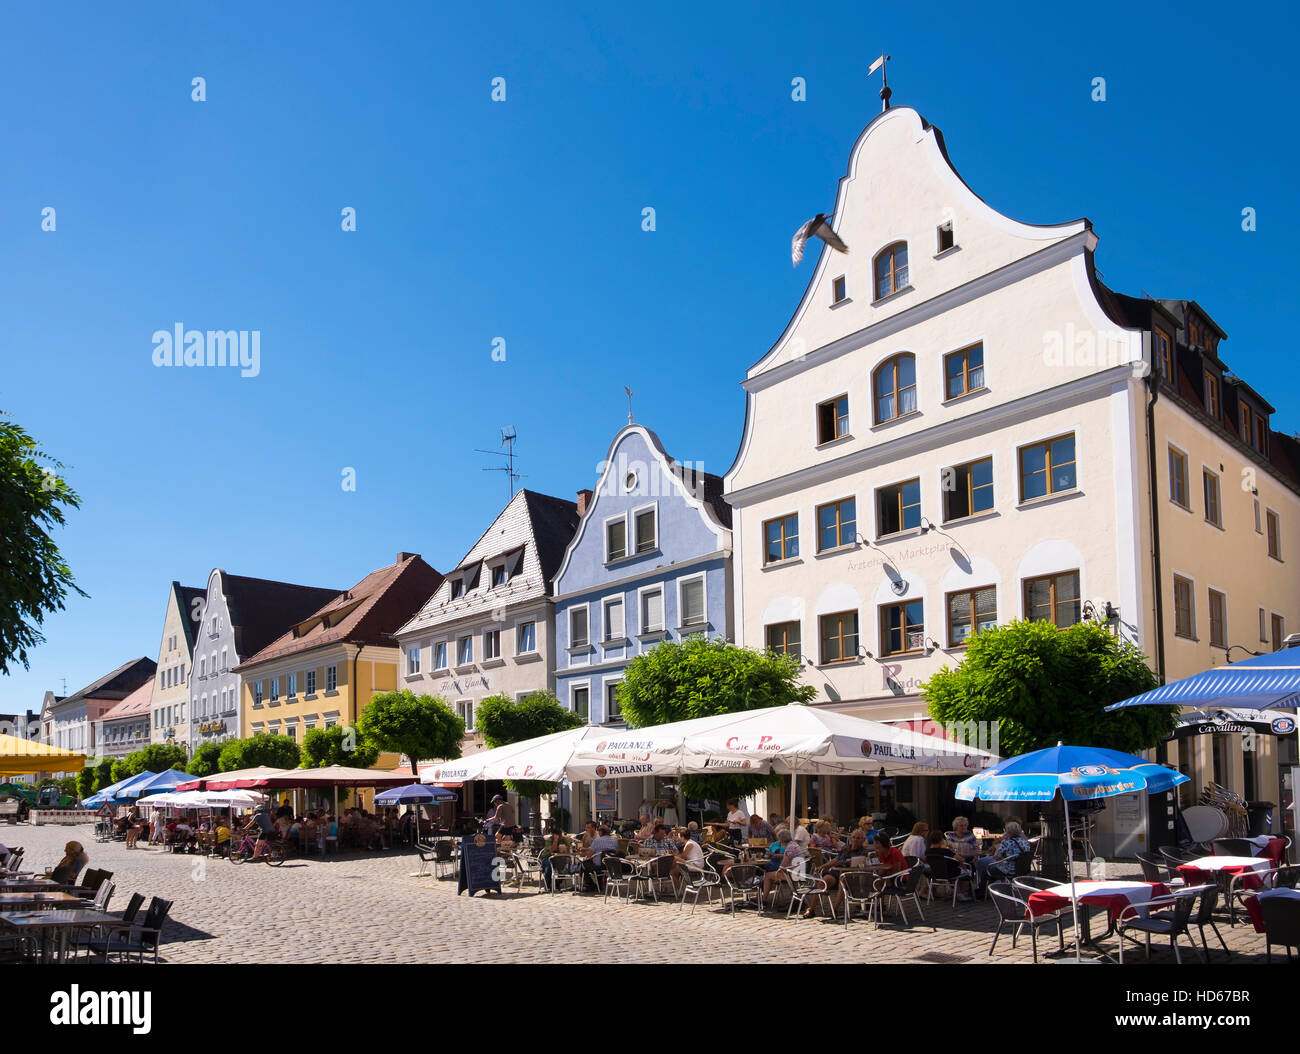 Marketplace with restaurants, Gunzburg, Swabia, Bavaria, Germany Stock Photo